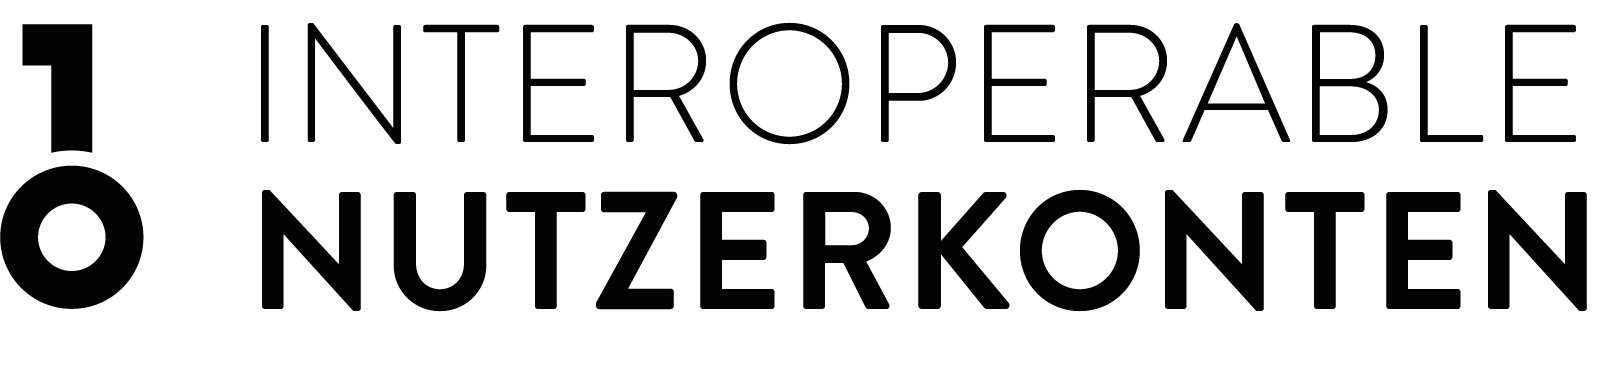 Logo Interoperable Nutzerkonten